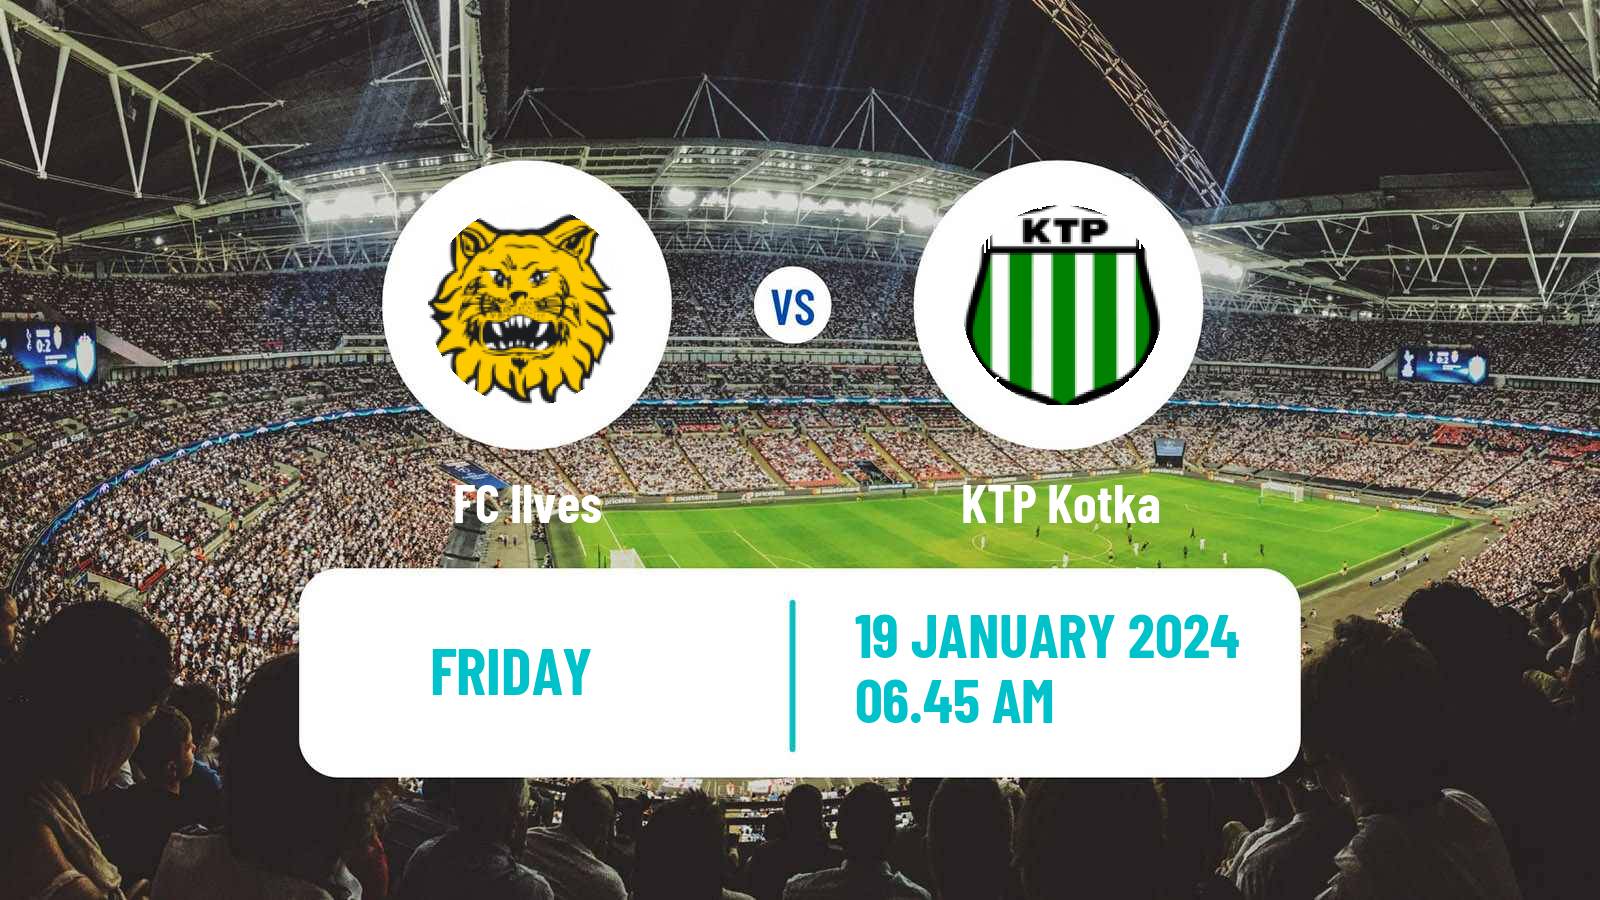 Soccer Club Friendly Ilves - KTP Kotka